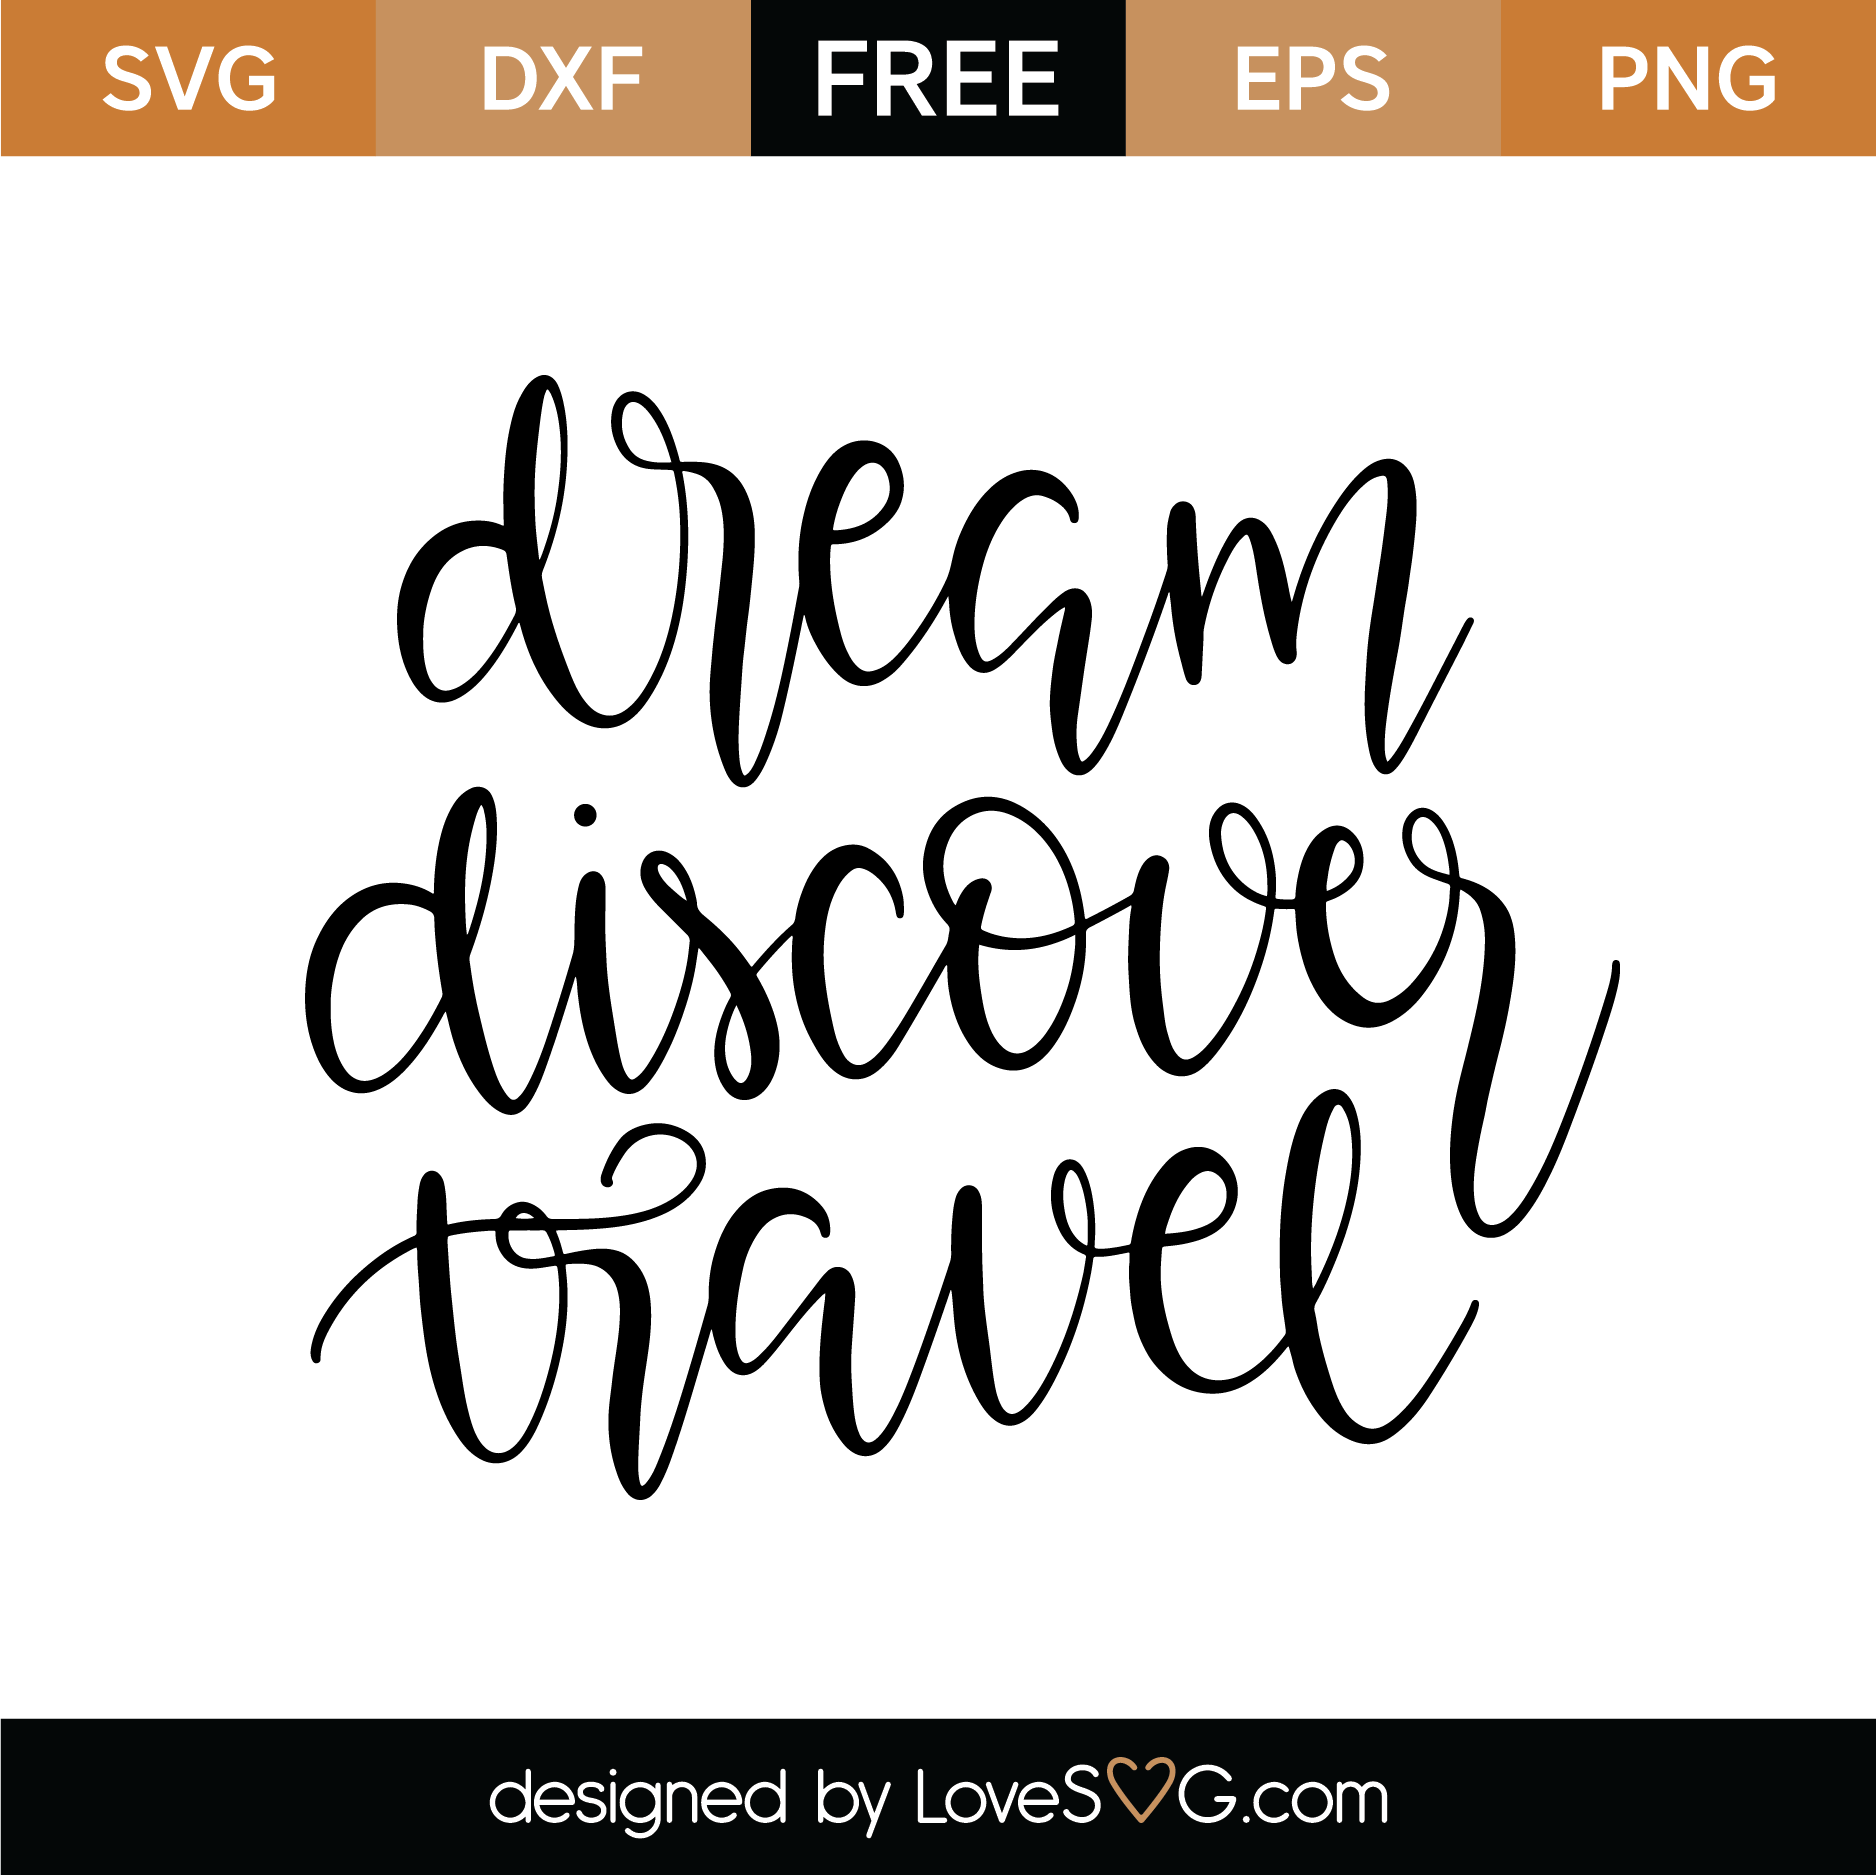 Download Free Dream Discover Travel SVG Cut File | Lovesvg.com